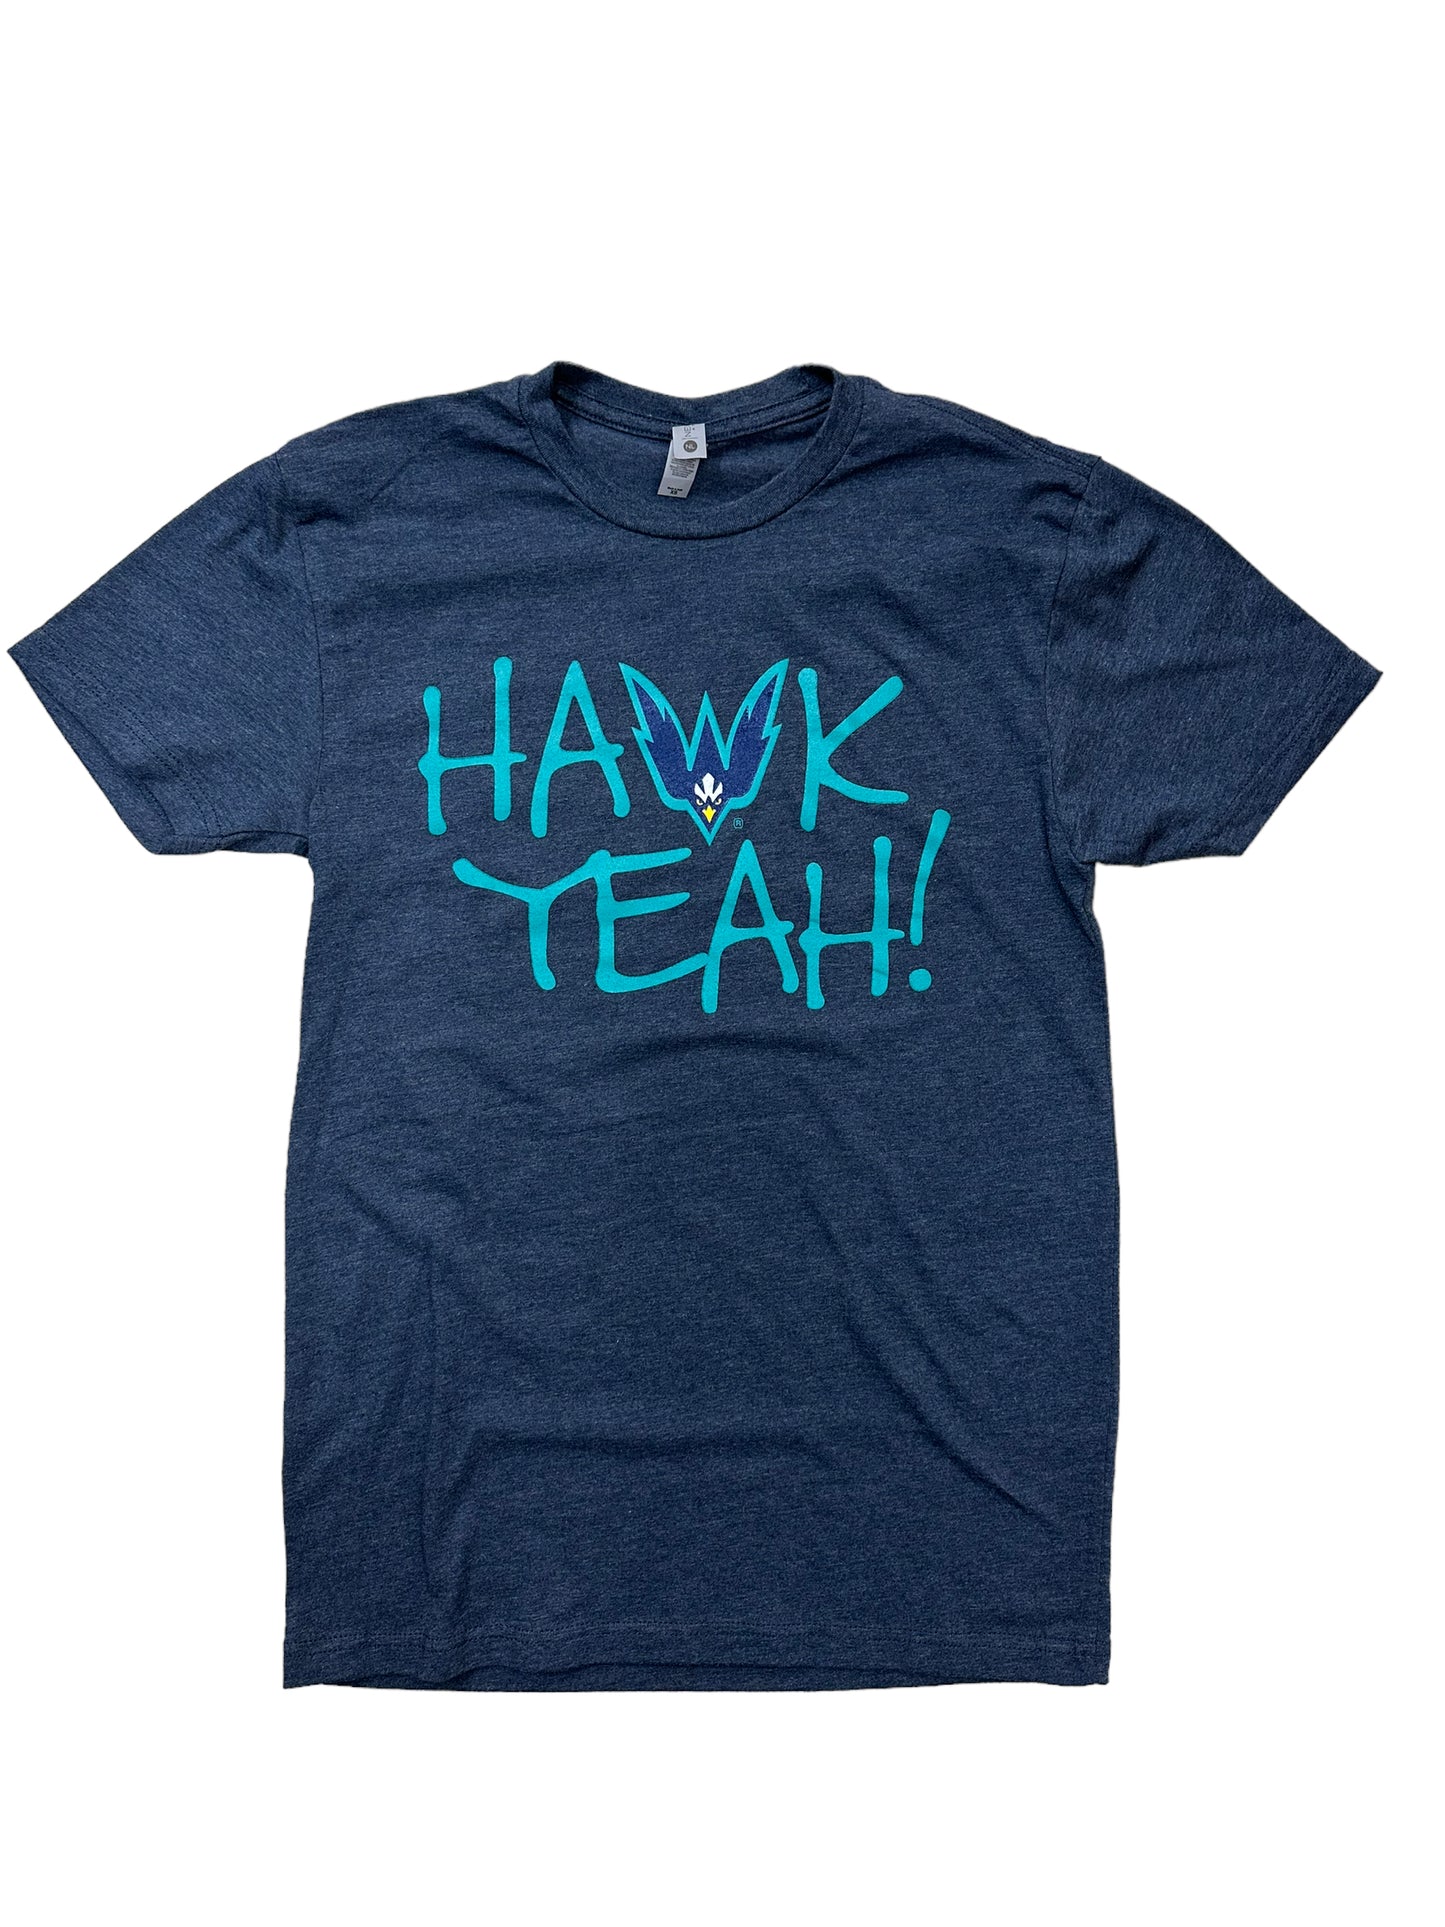 Hawk Yeah UNCW - T Shirt - Midnight Navy